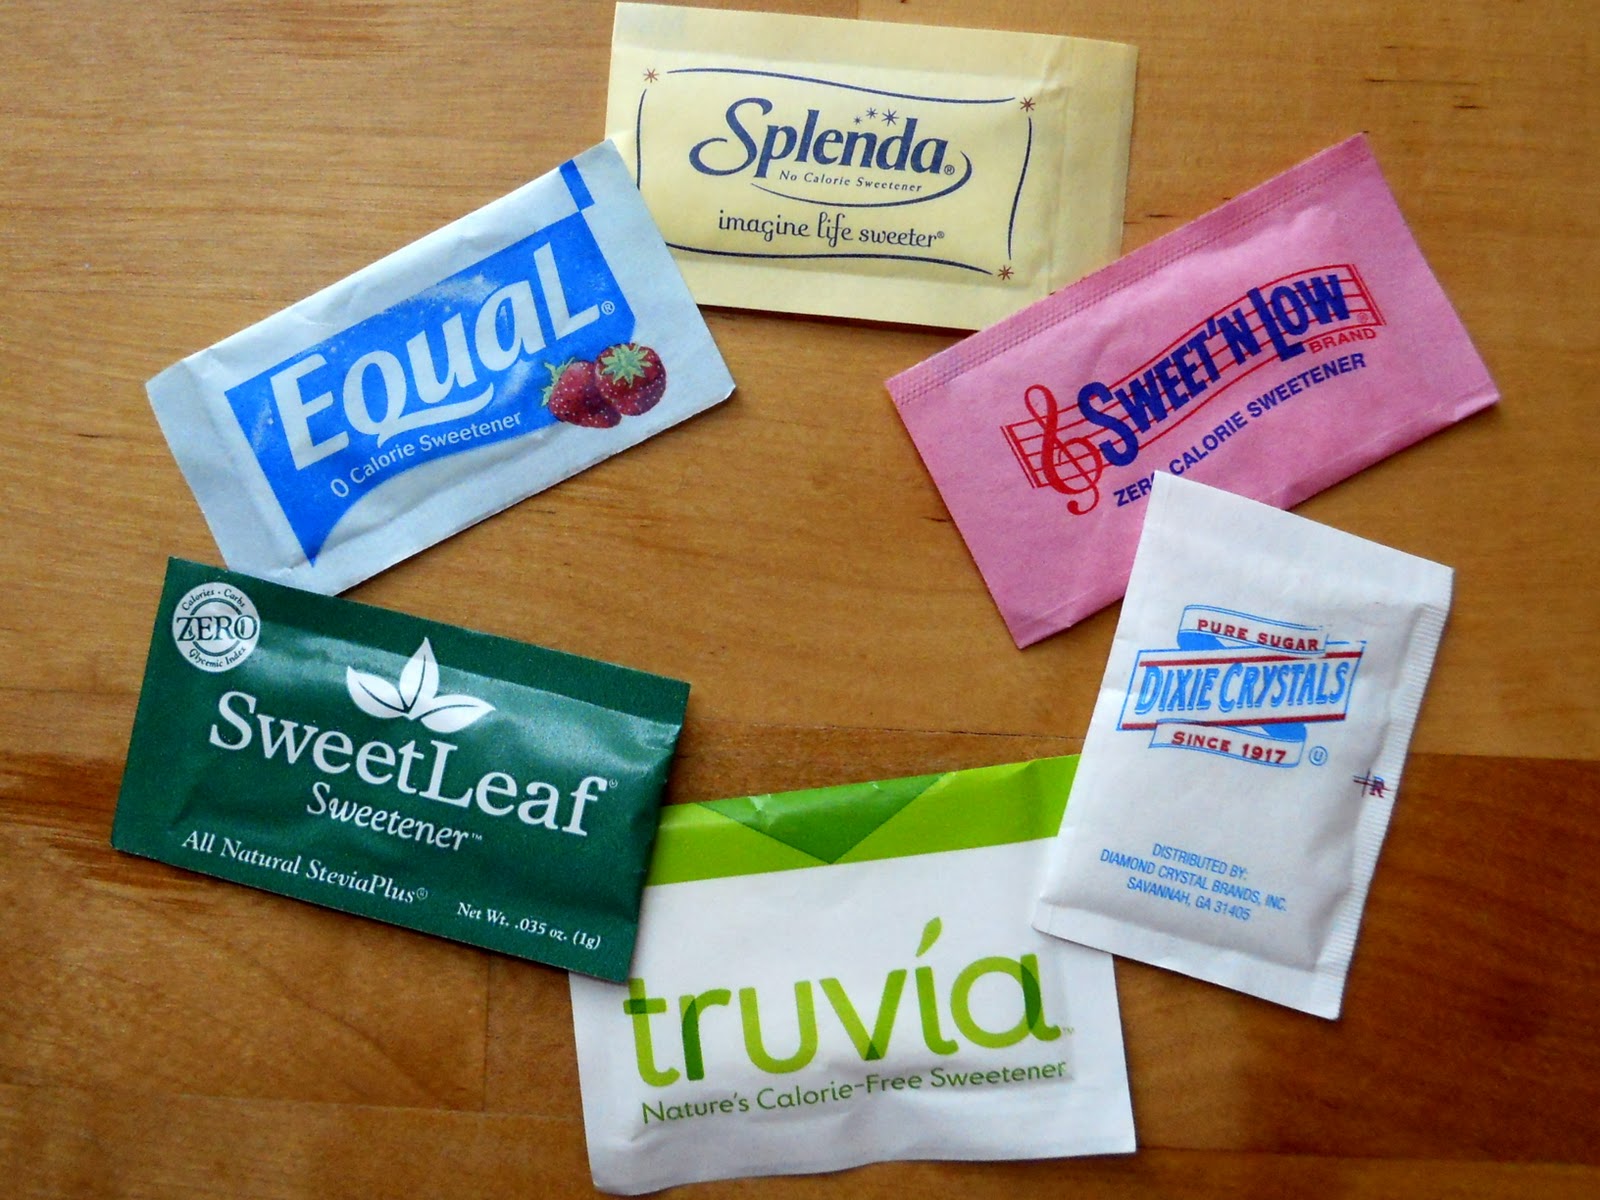 Can sweeteners increase cardiovascular risk? 